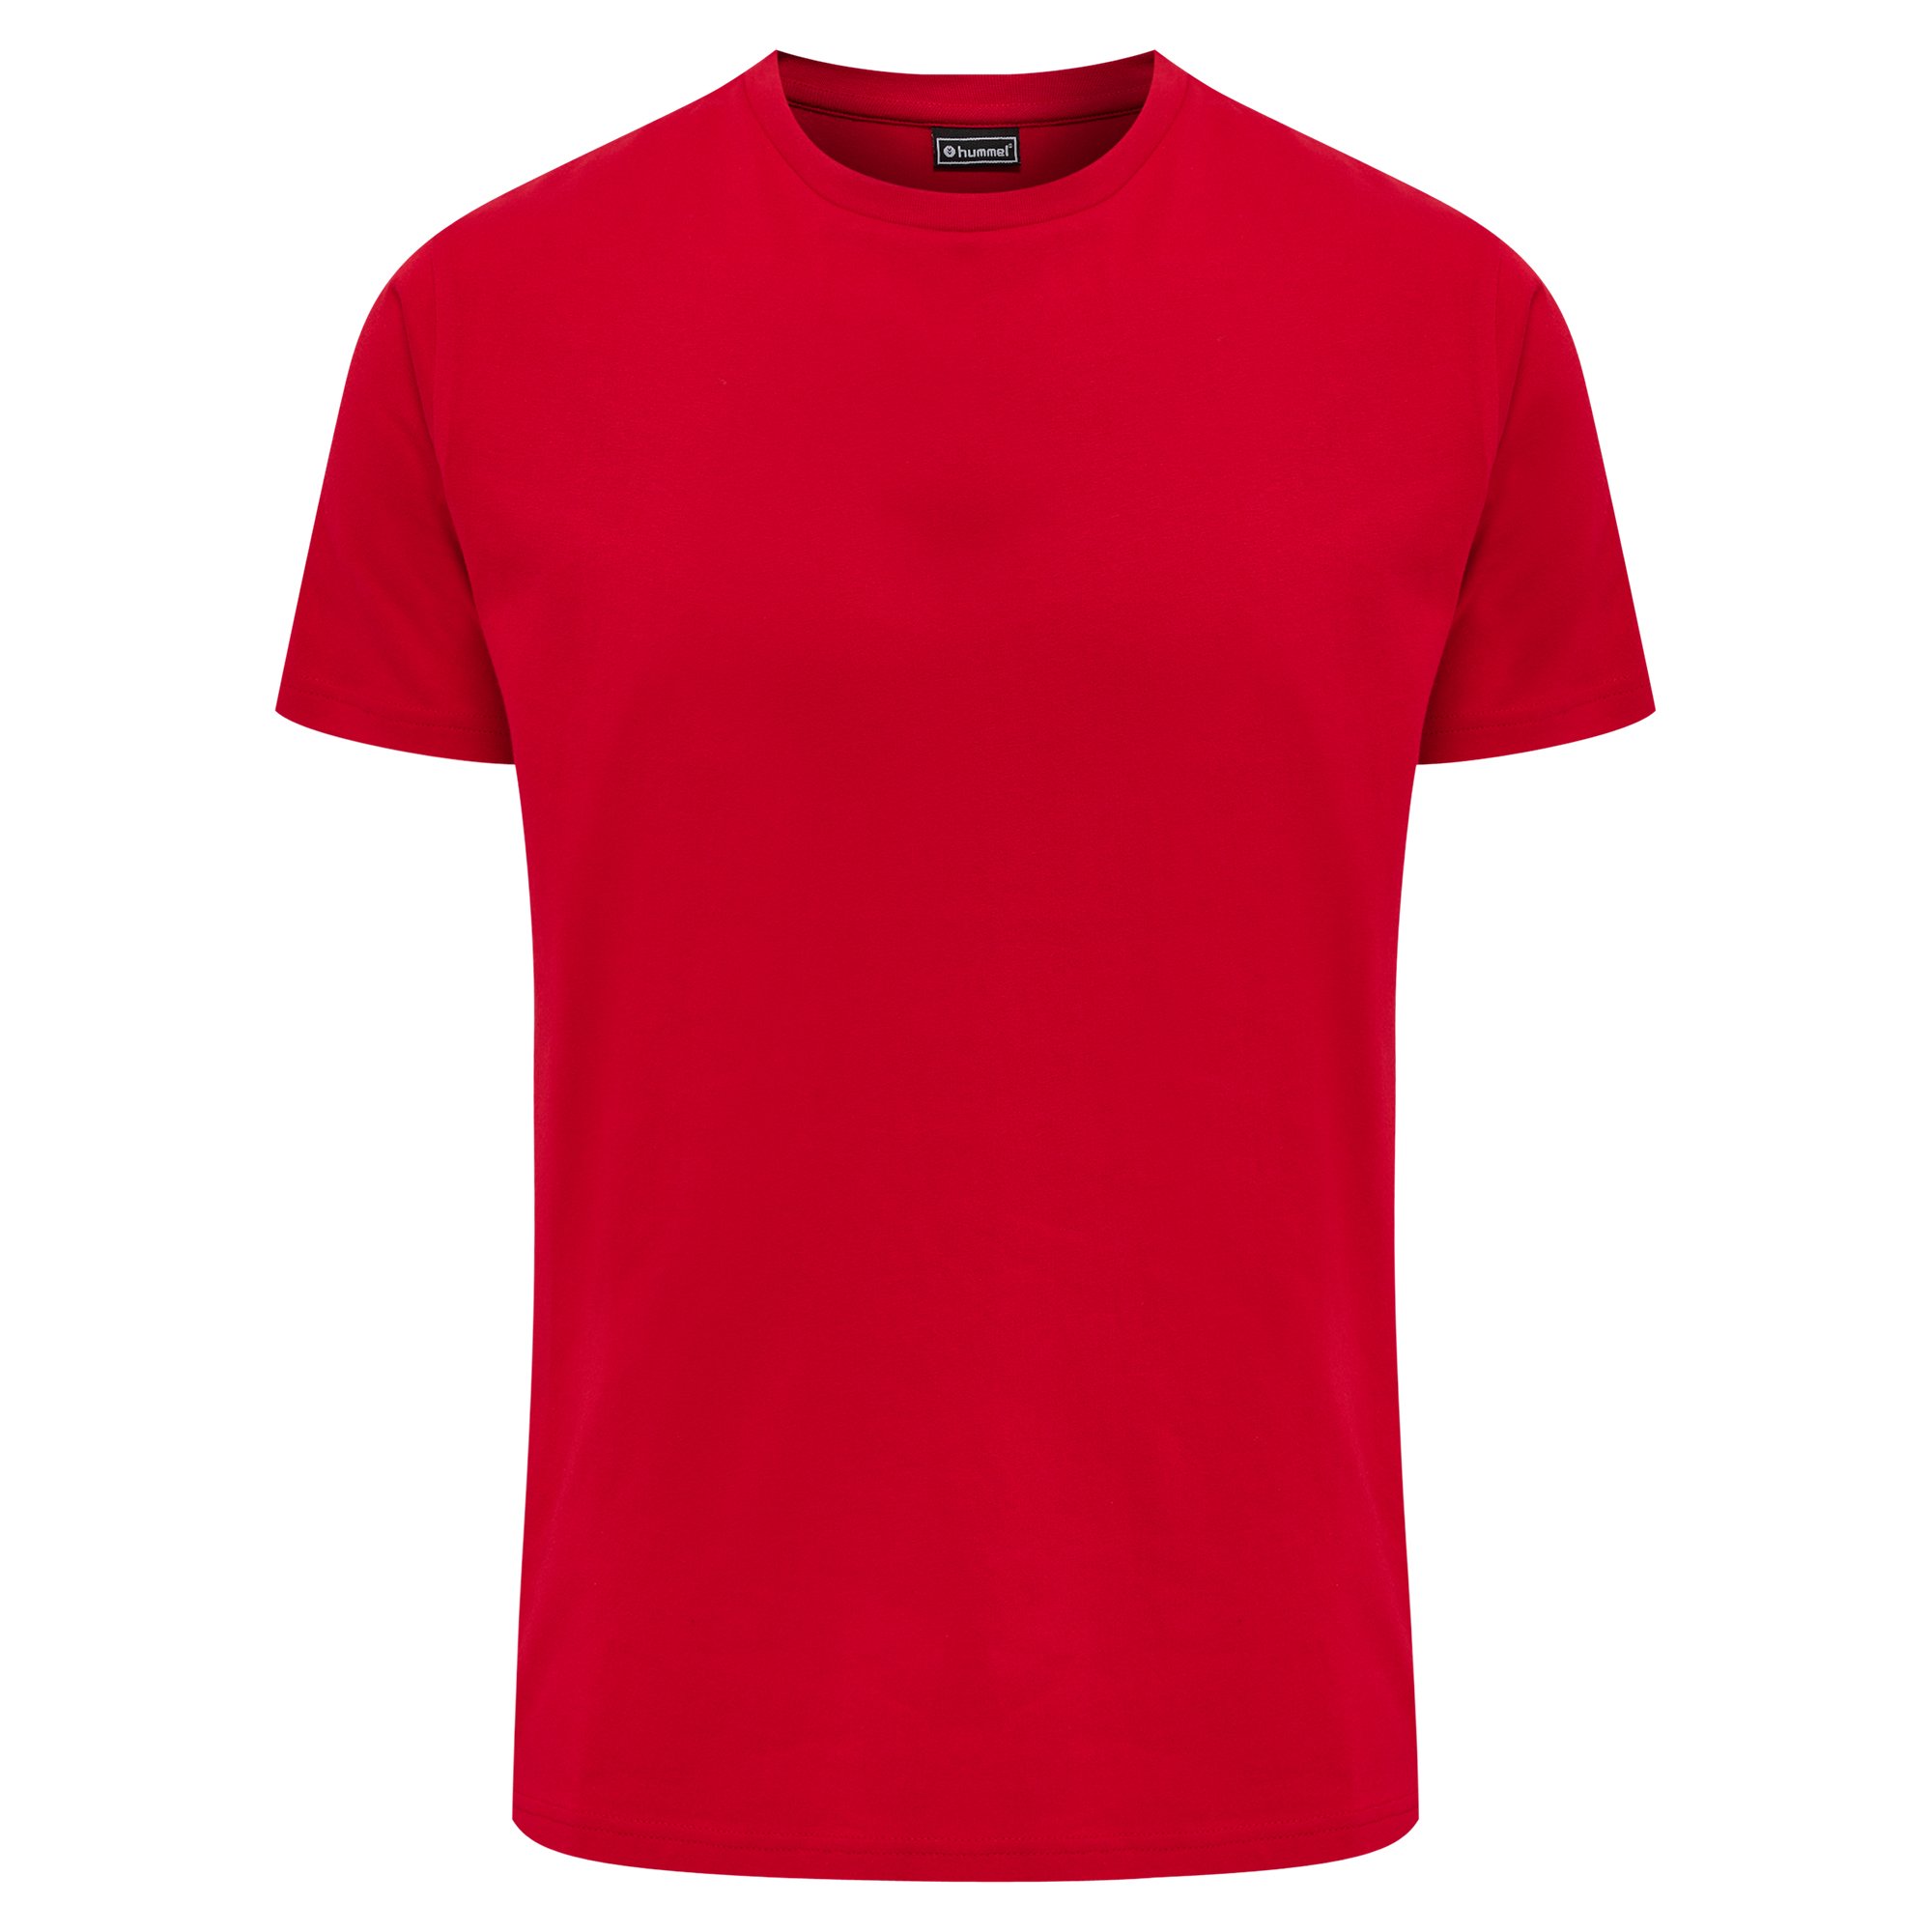 Hummel Red Heavy T-Shirt